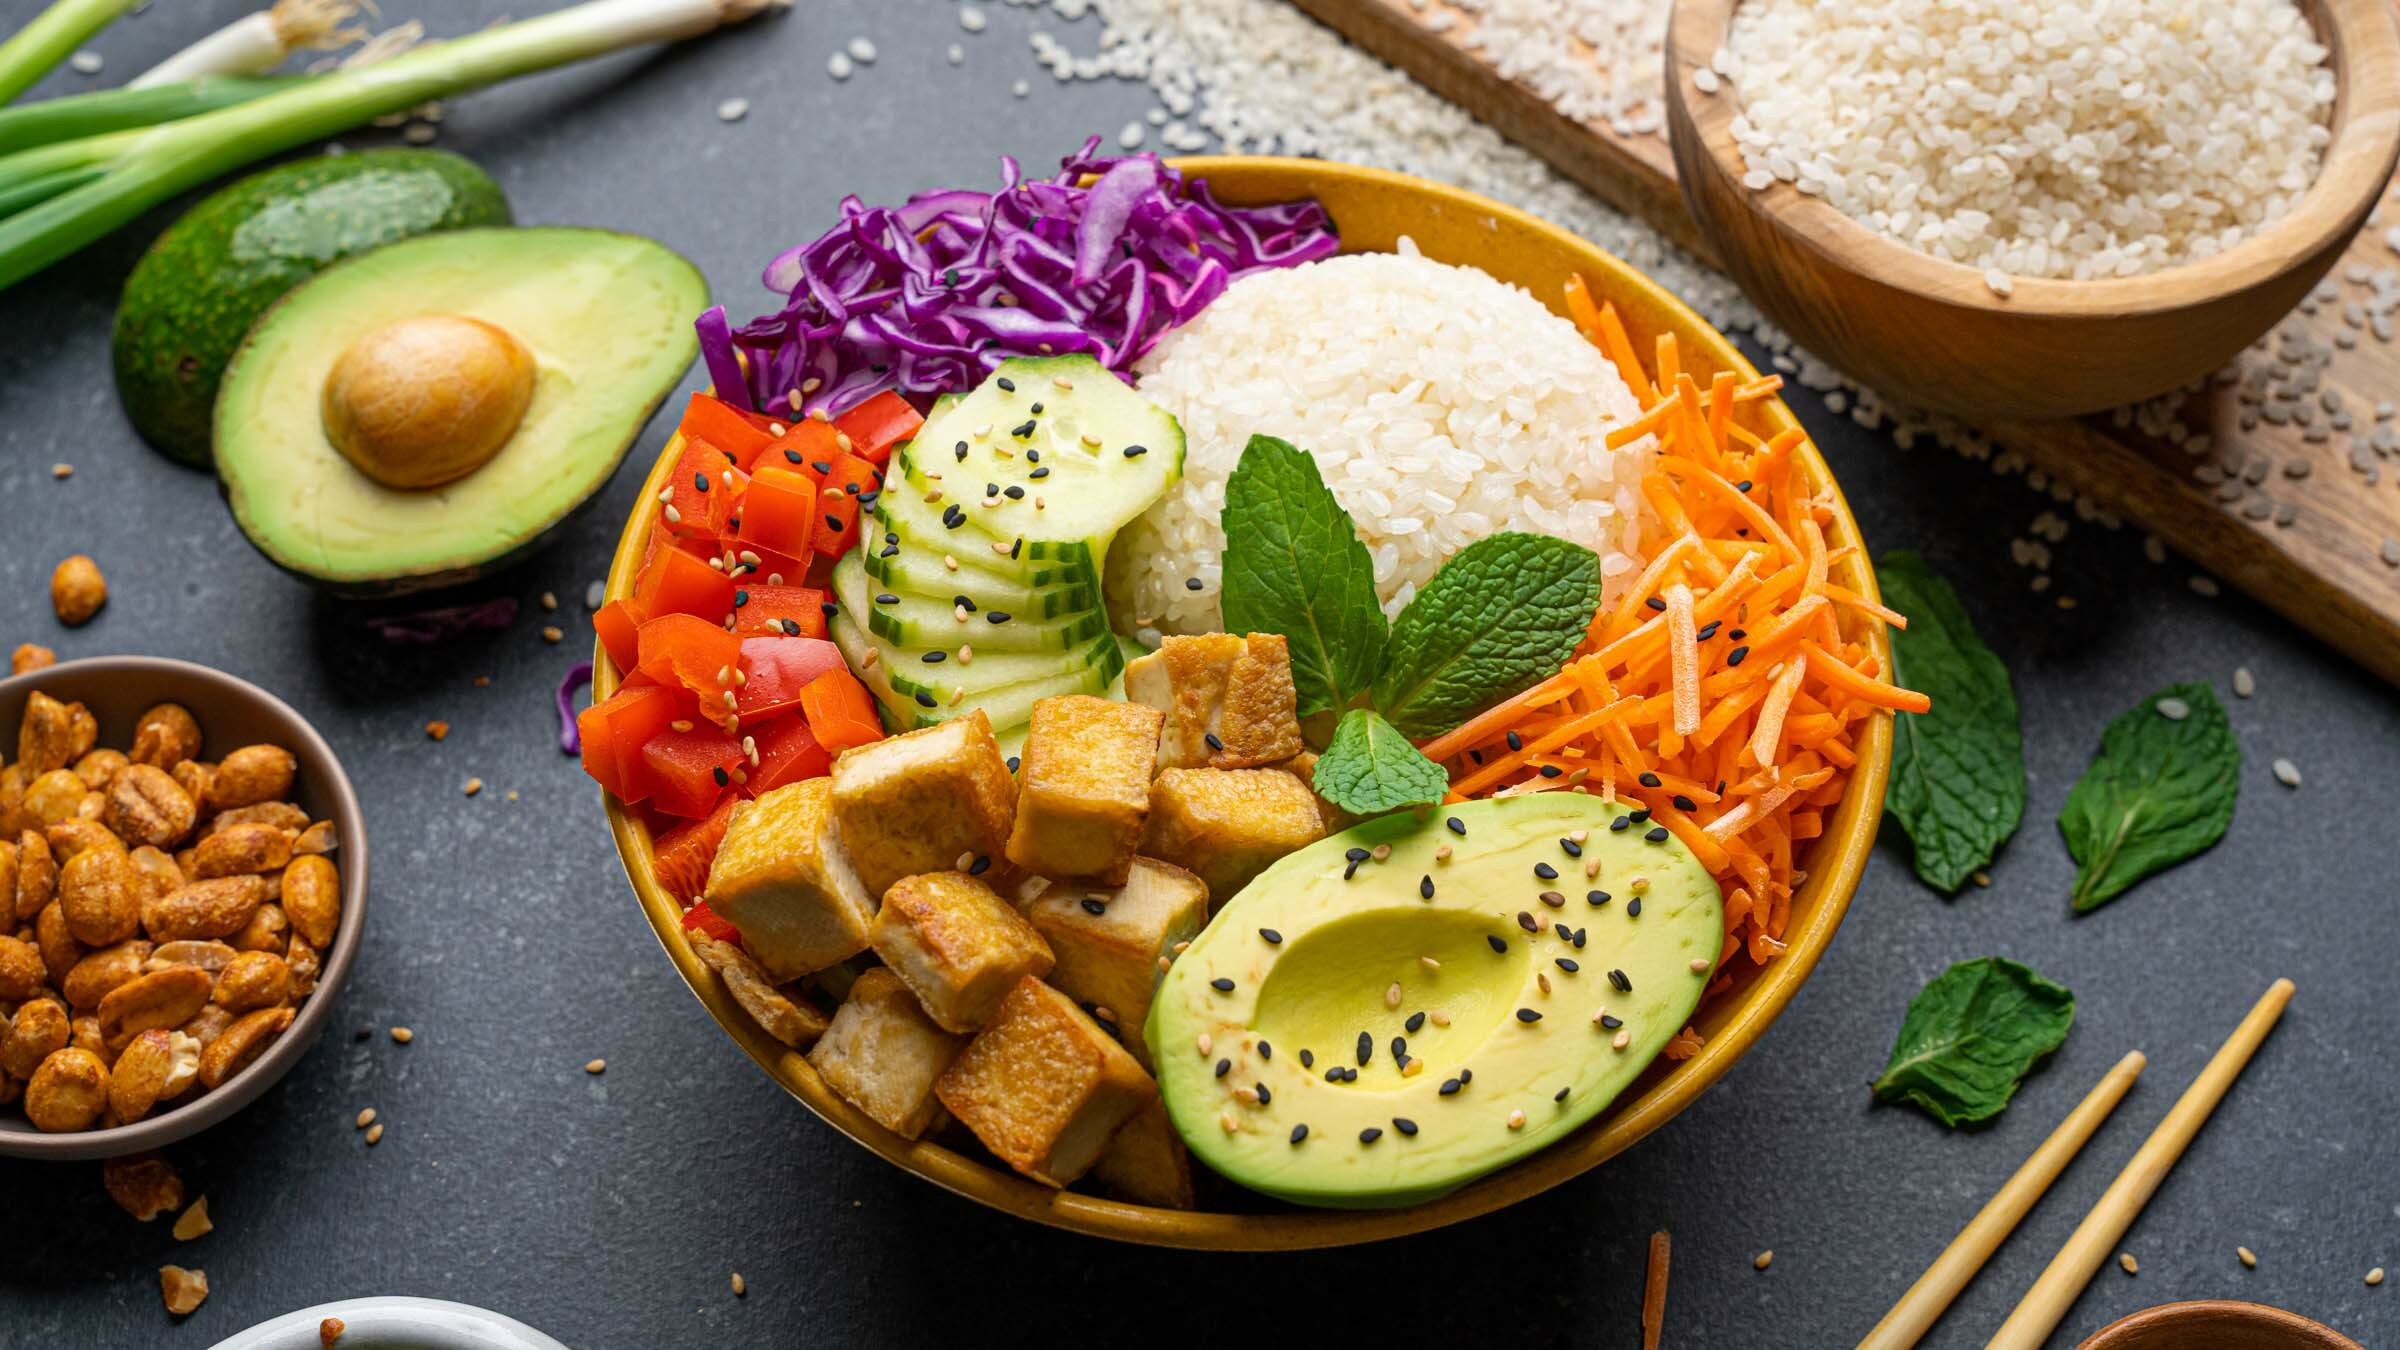 Lundberg sushi rice with fresh vegetable ingredients in bowl.